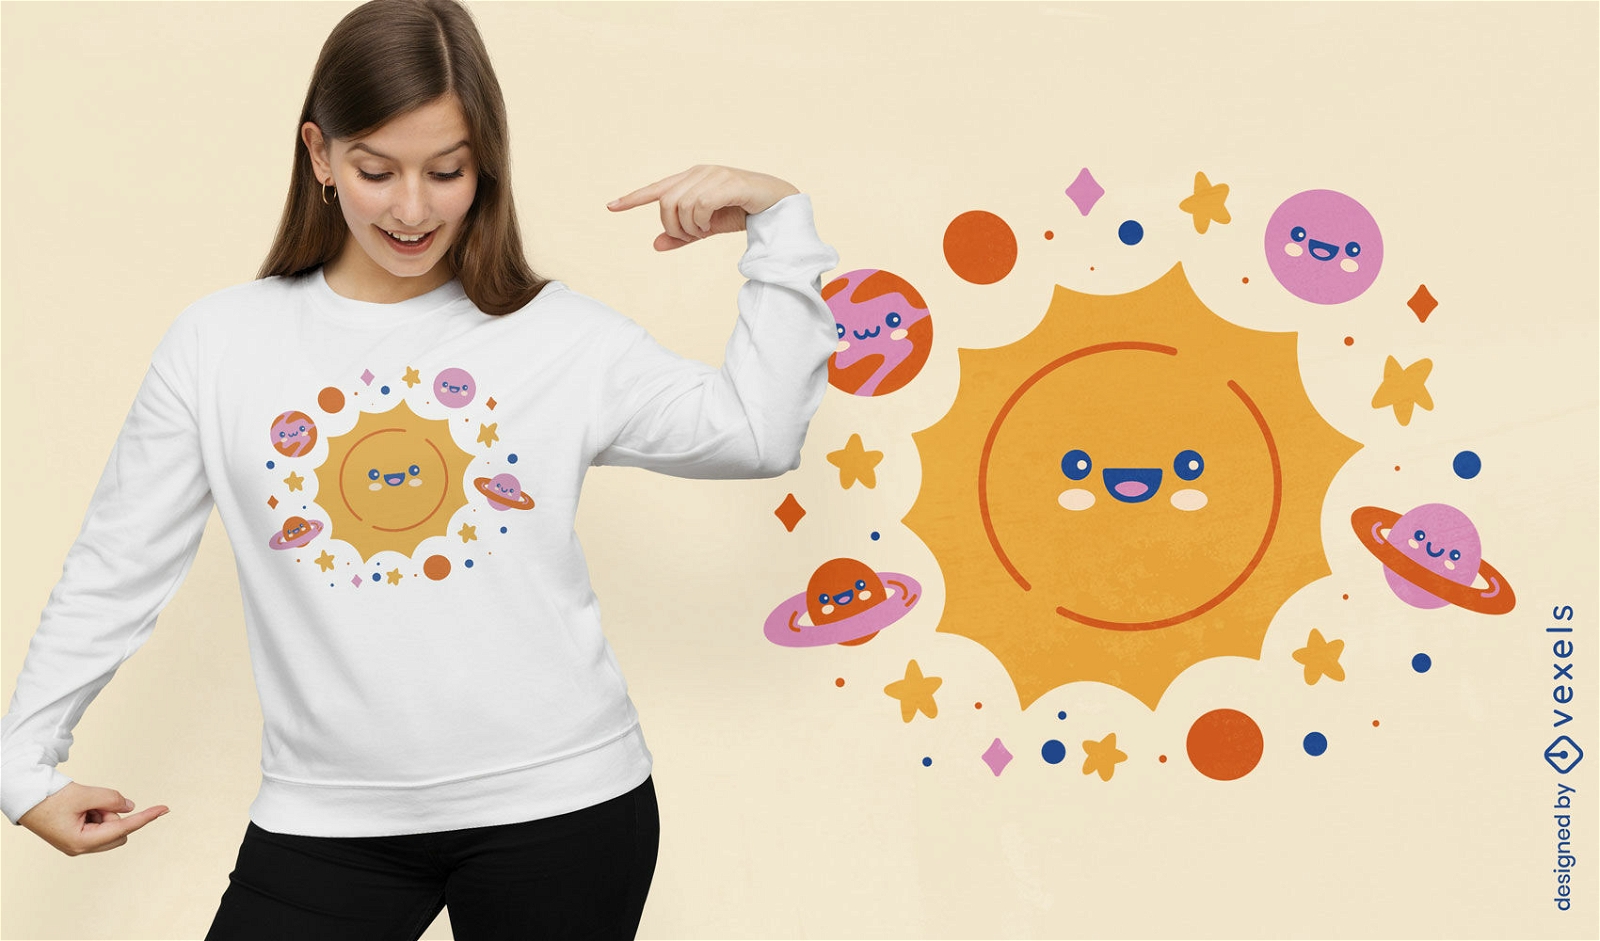 Dise?o de camiseta de estilo lindo del sistema solar